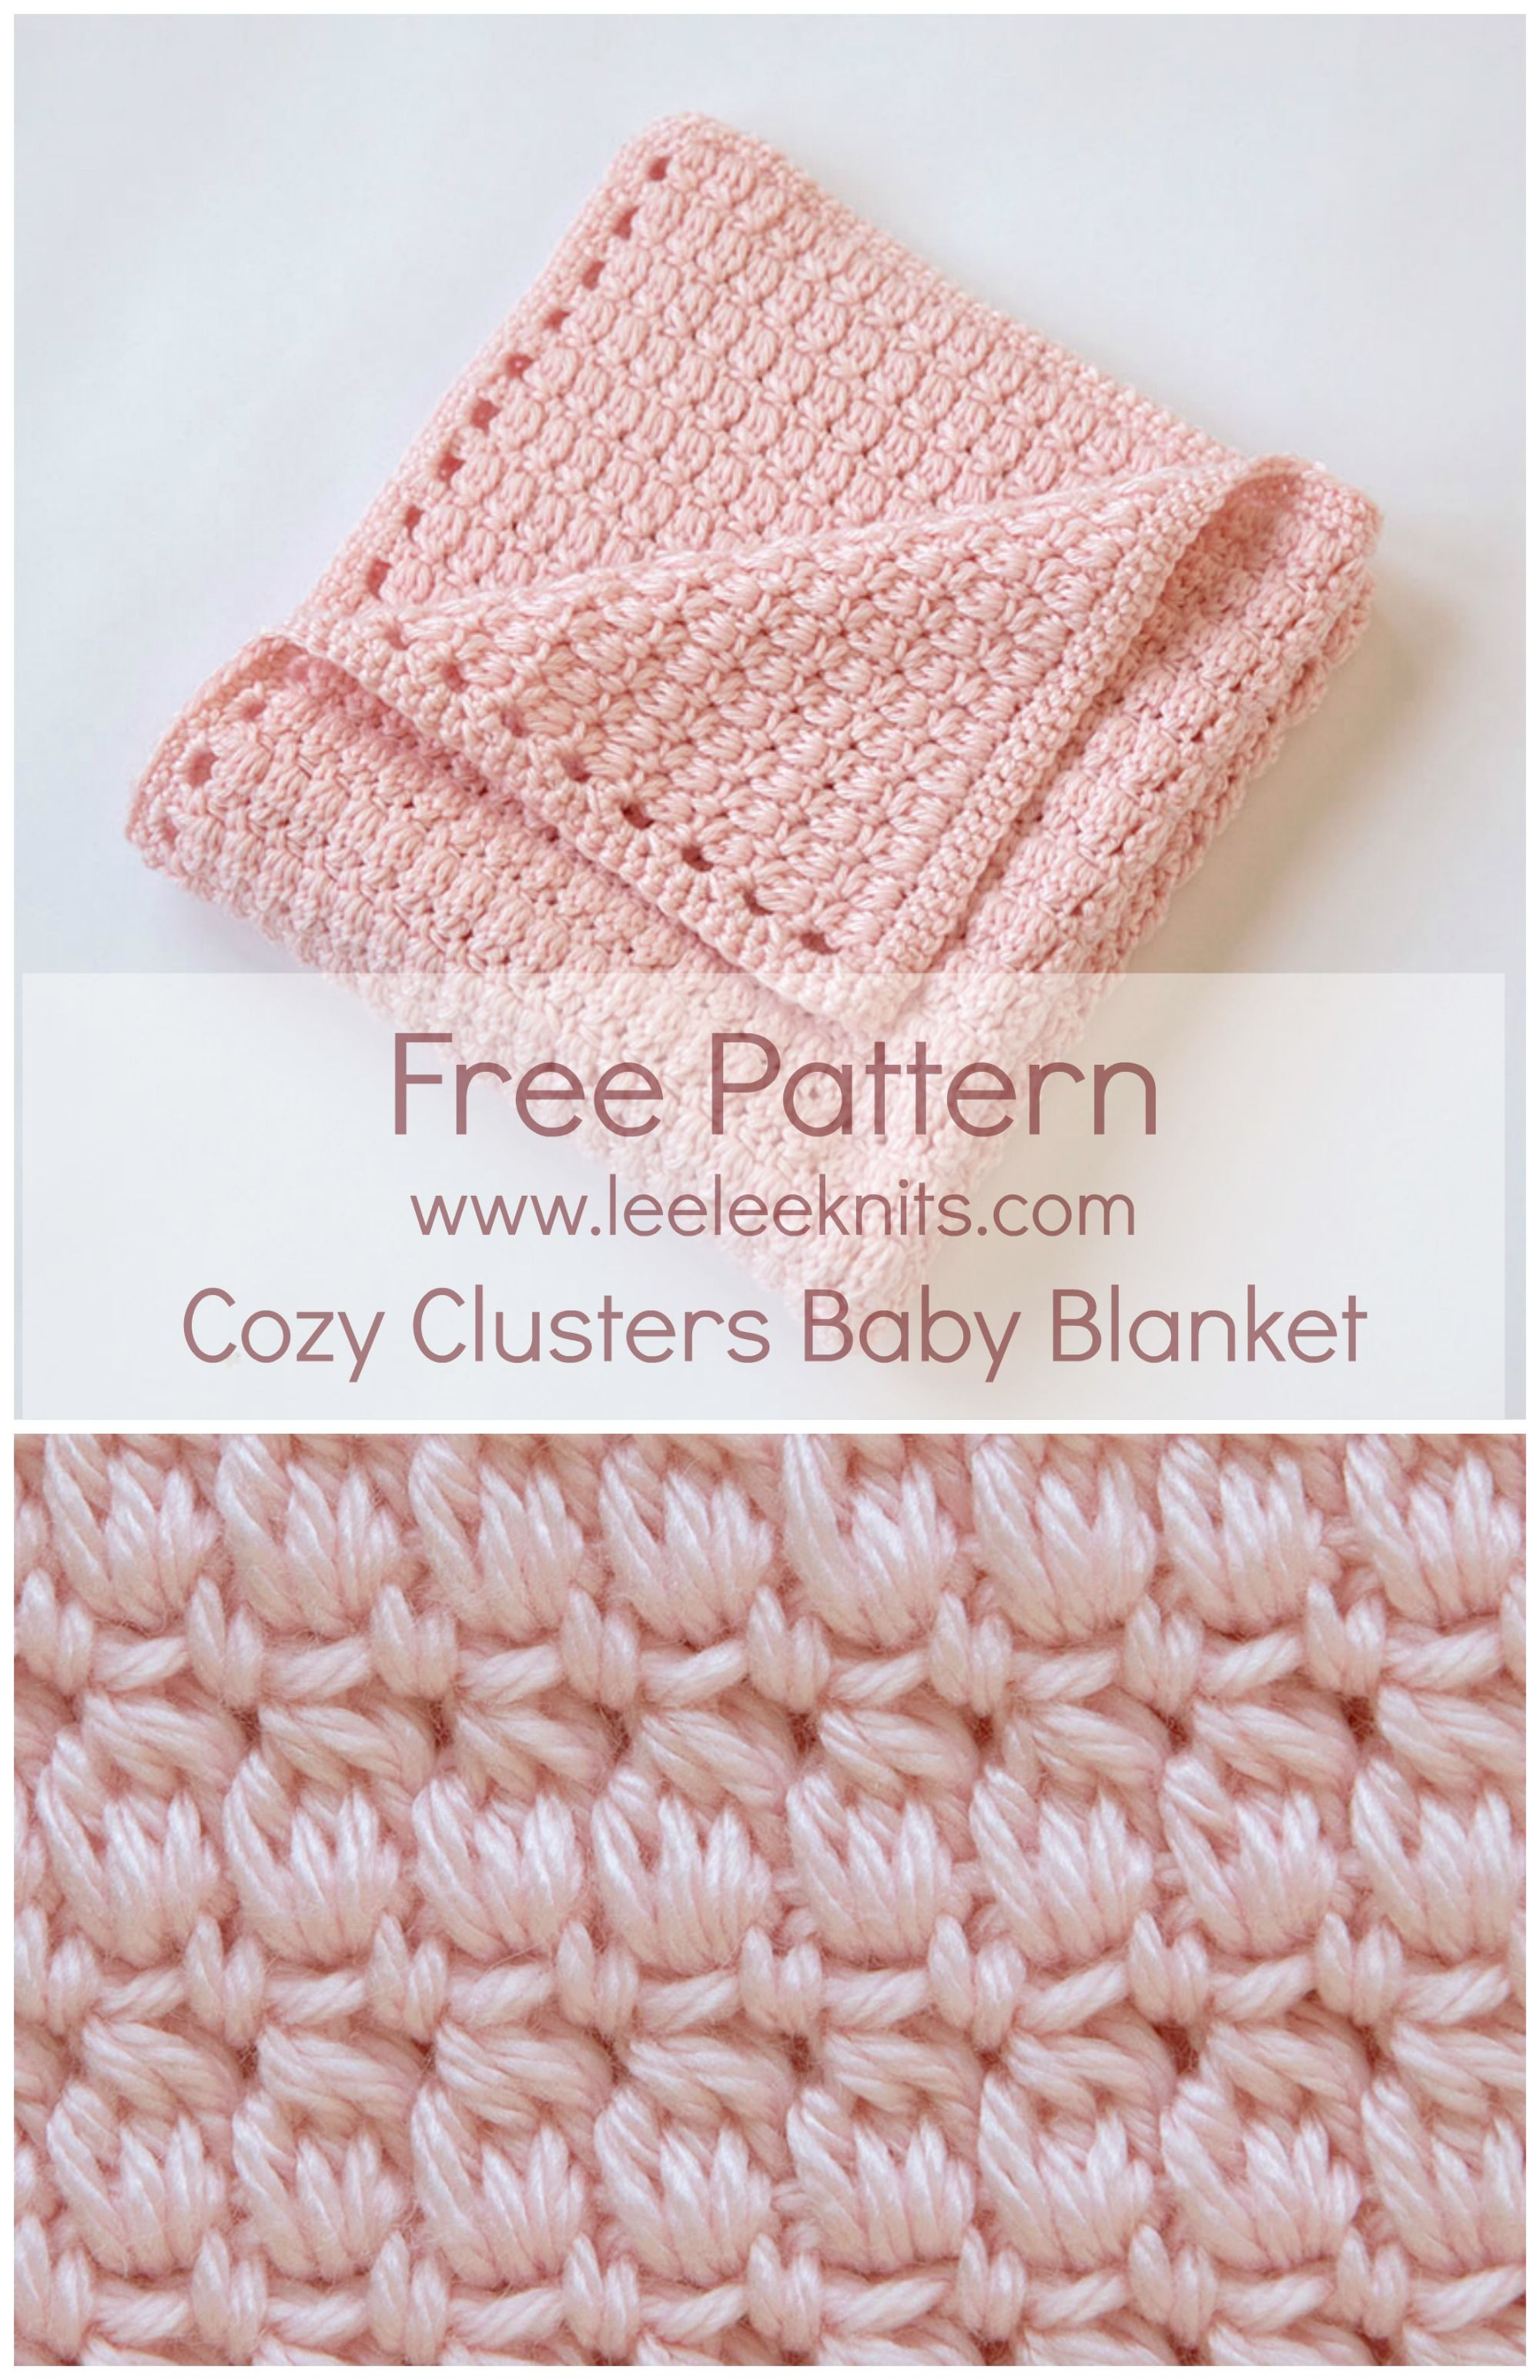 Free Baby Crochet Baby Blanket Patterns Cozy Clusters Free Crochet Ba Blanket Pattern Sewing Crocheting